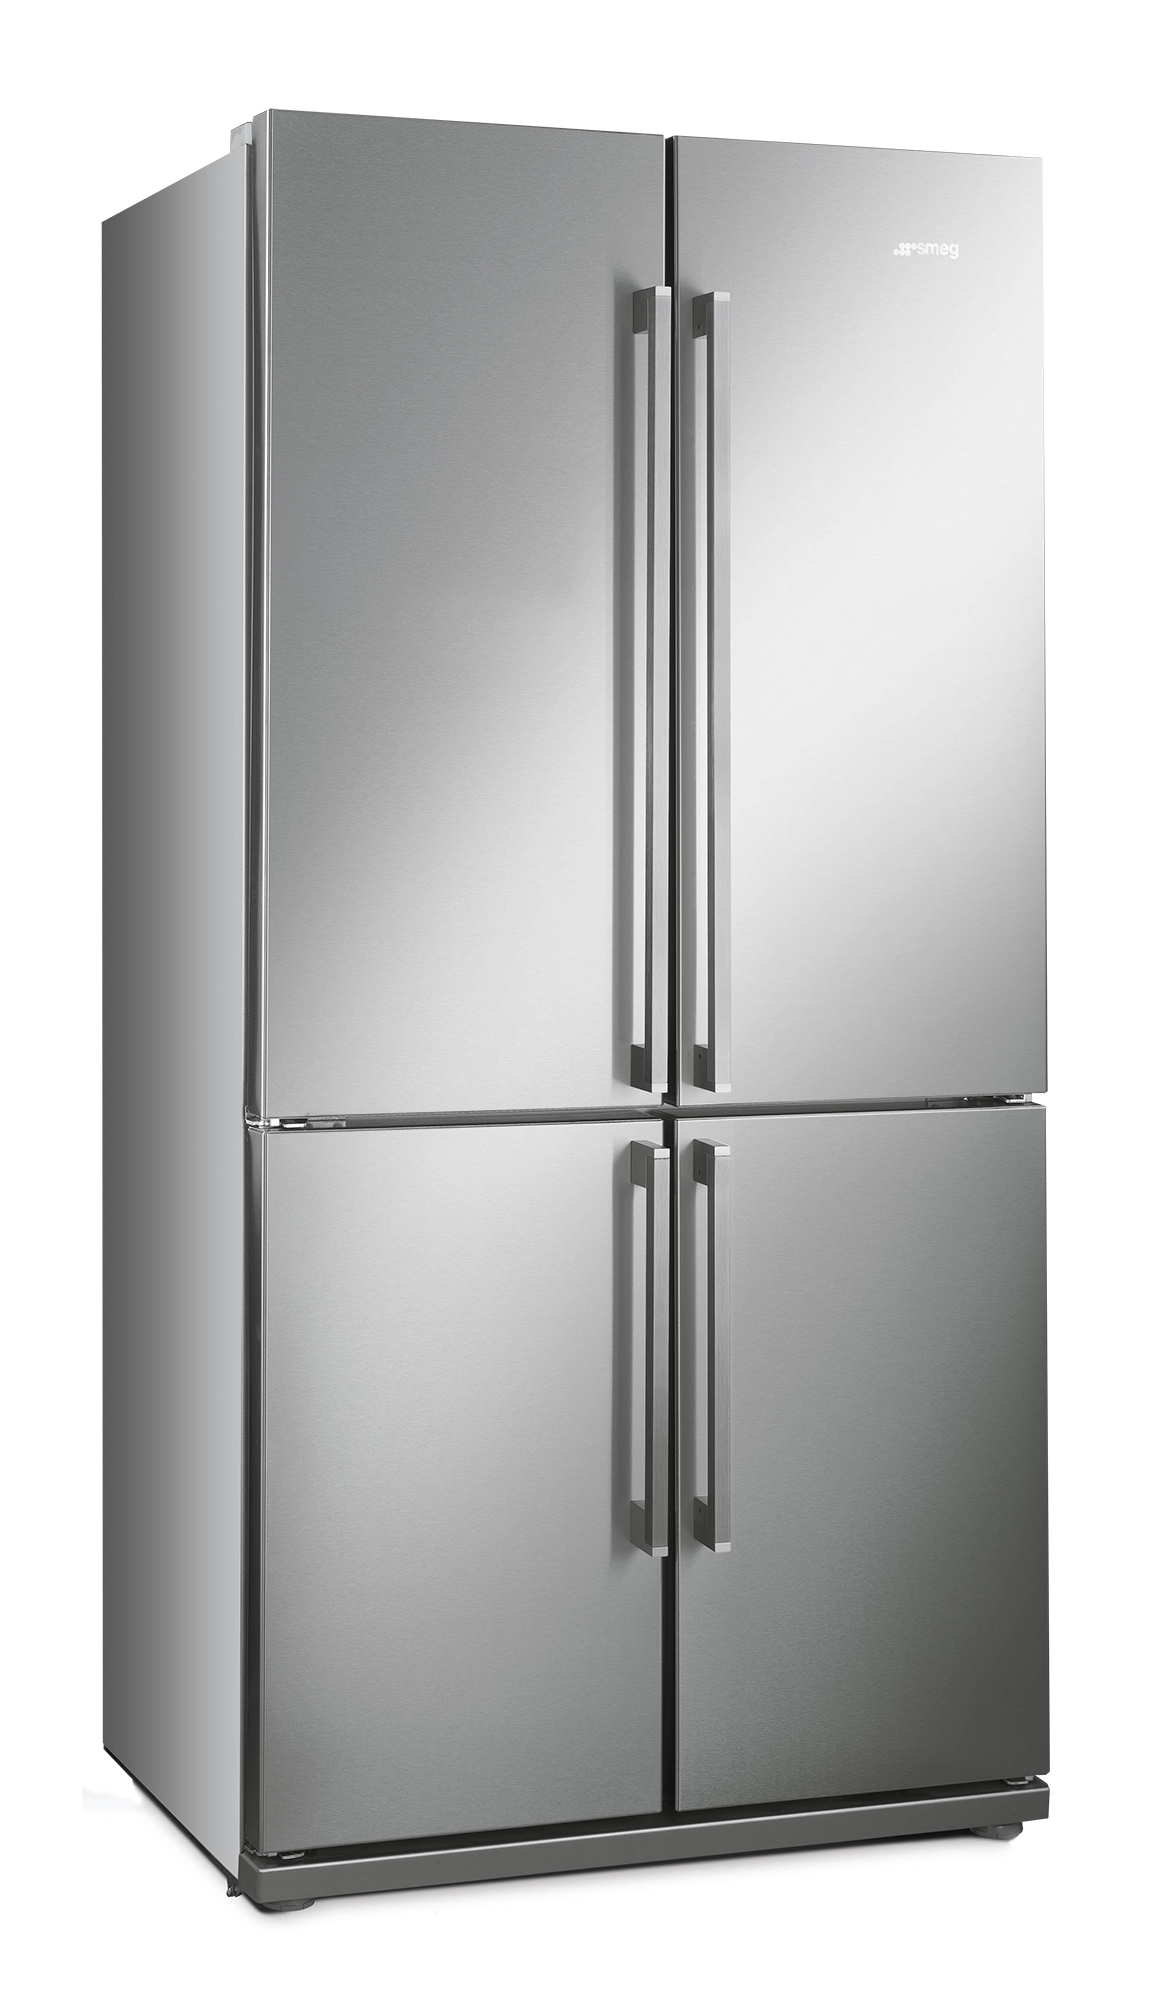 Холодильники в хорошем состоянии. Холодильник Side-by-Side Смег. Холодильник Smeg fq60bdf белый. Холодильник двухкамерный Side-by-Side. Холодильник Смег Сайд бай Сайд.